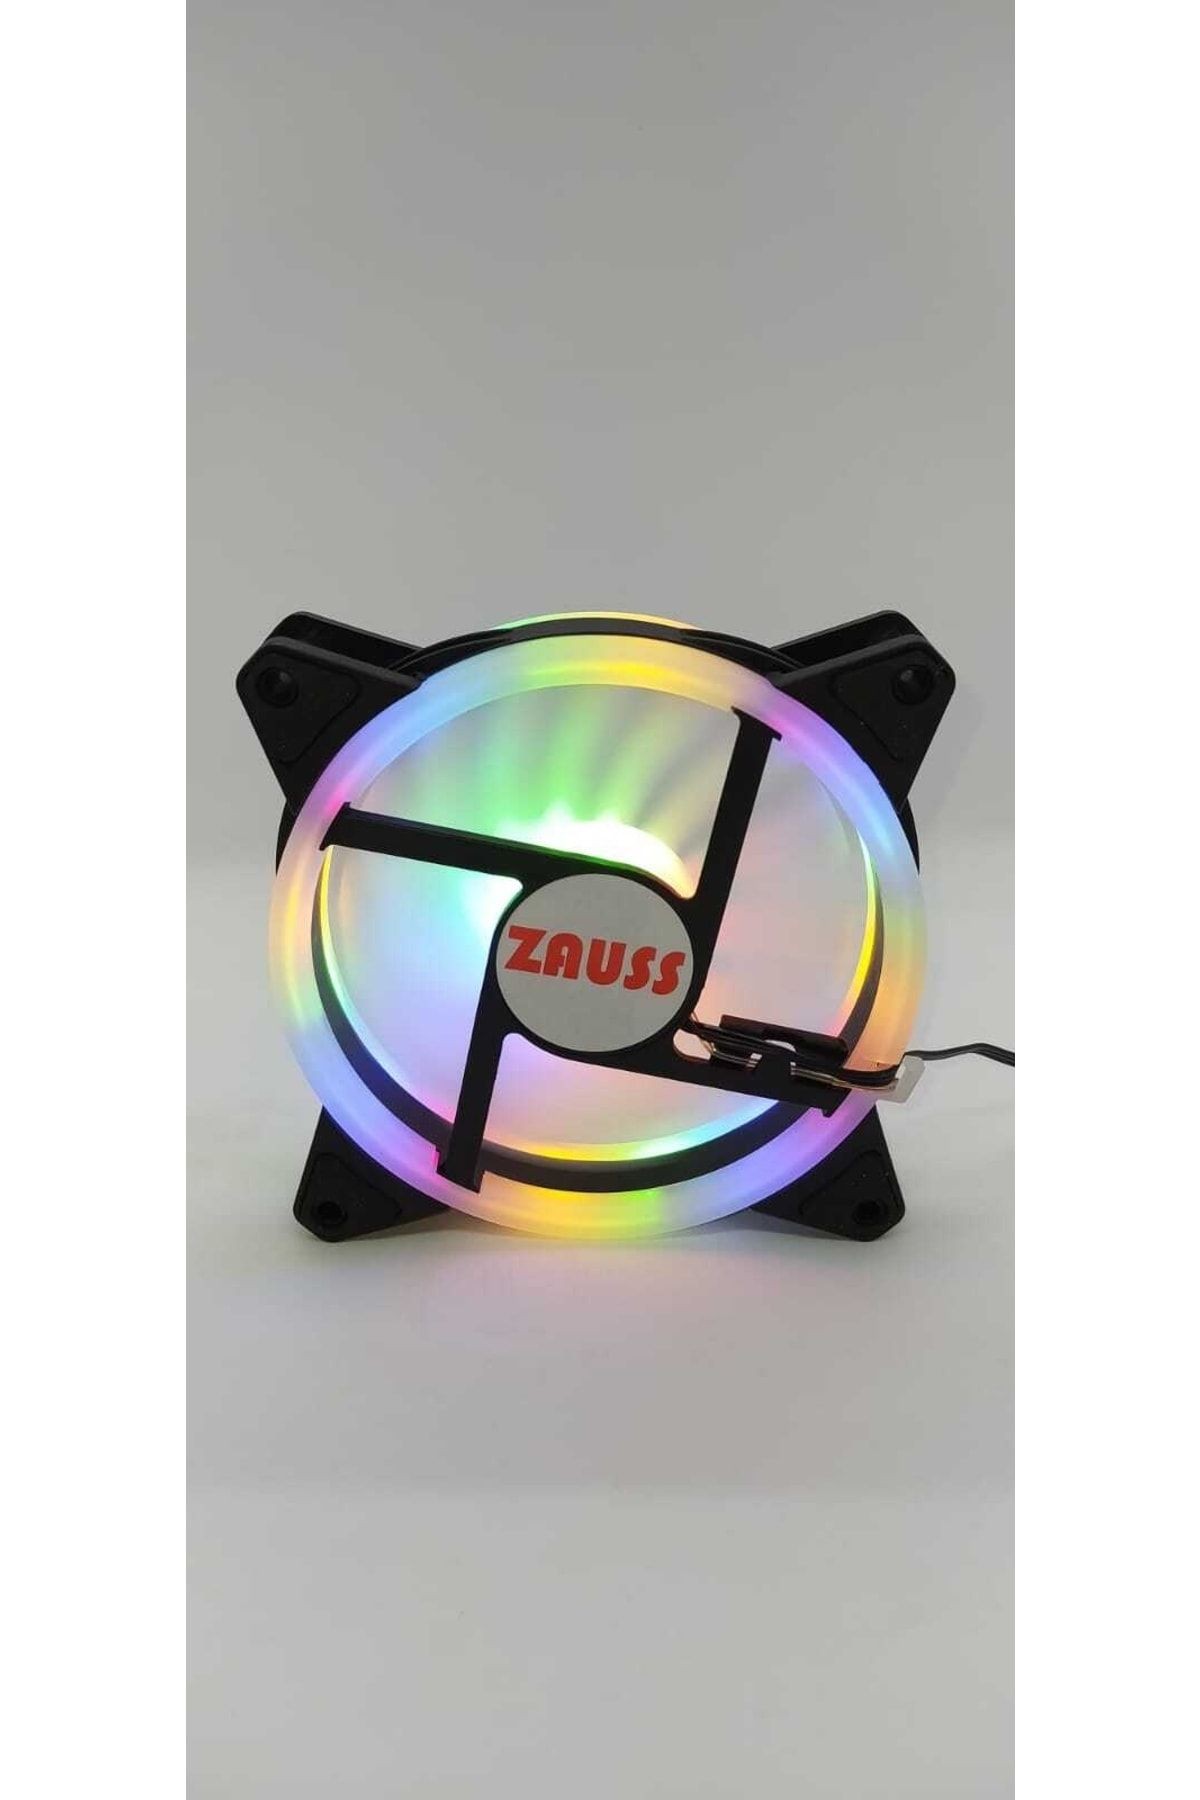 Unichrome Rainbow Rgb Kasa Mining Fanı 12cm Renkli Gökkuşağı Fanı Iç Ve Dış Aydınlatmalı 0.3a